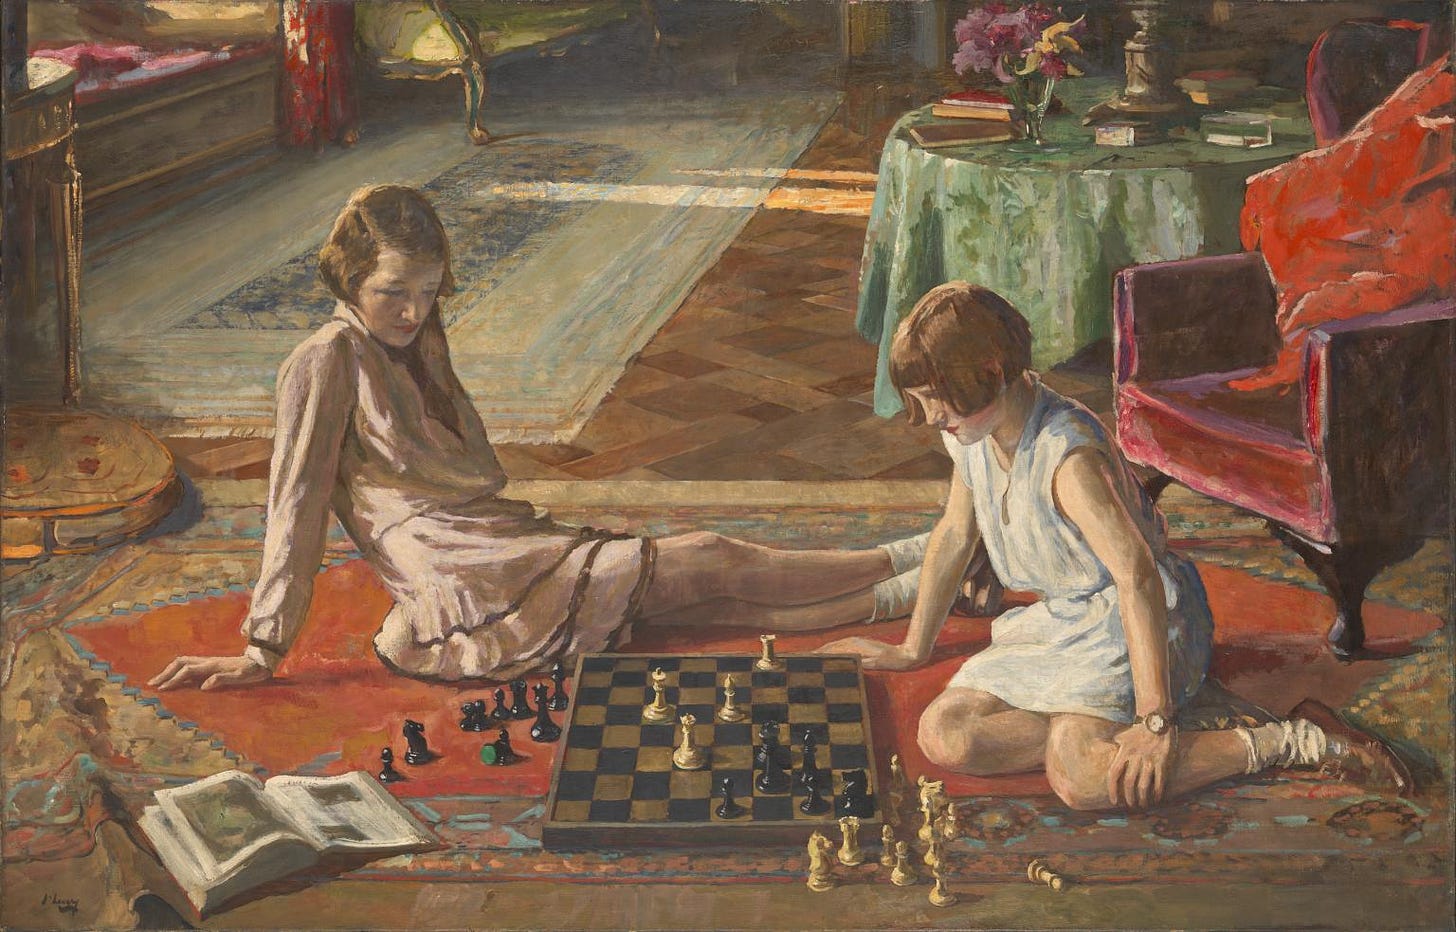 File:The Chess Players, John Lavery (1929).jpg - Wikimedia Commons